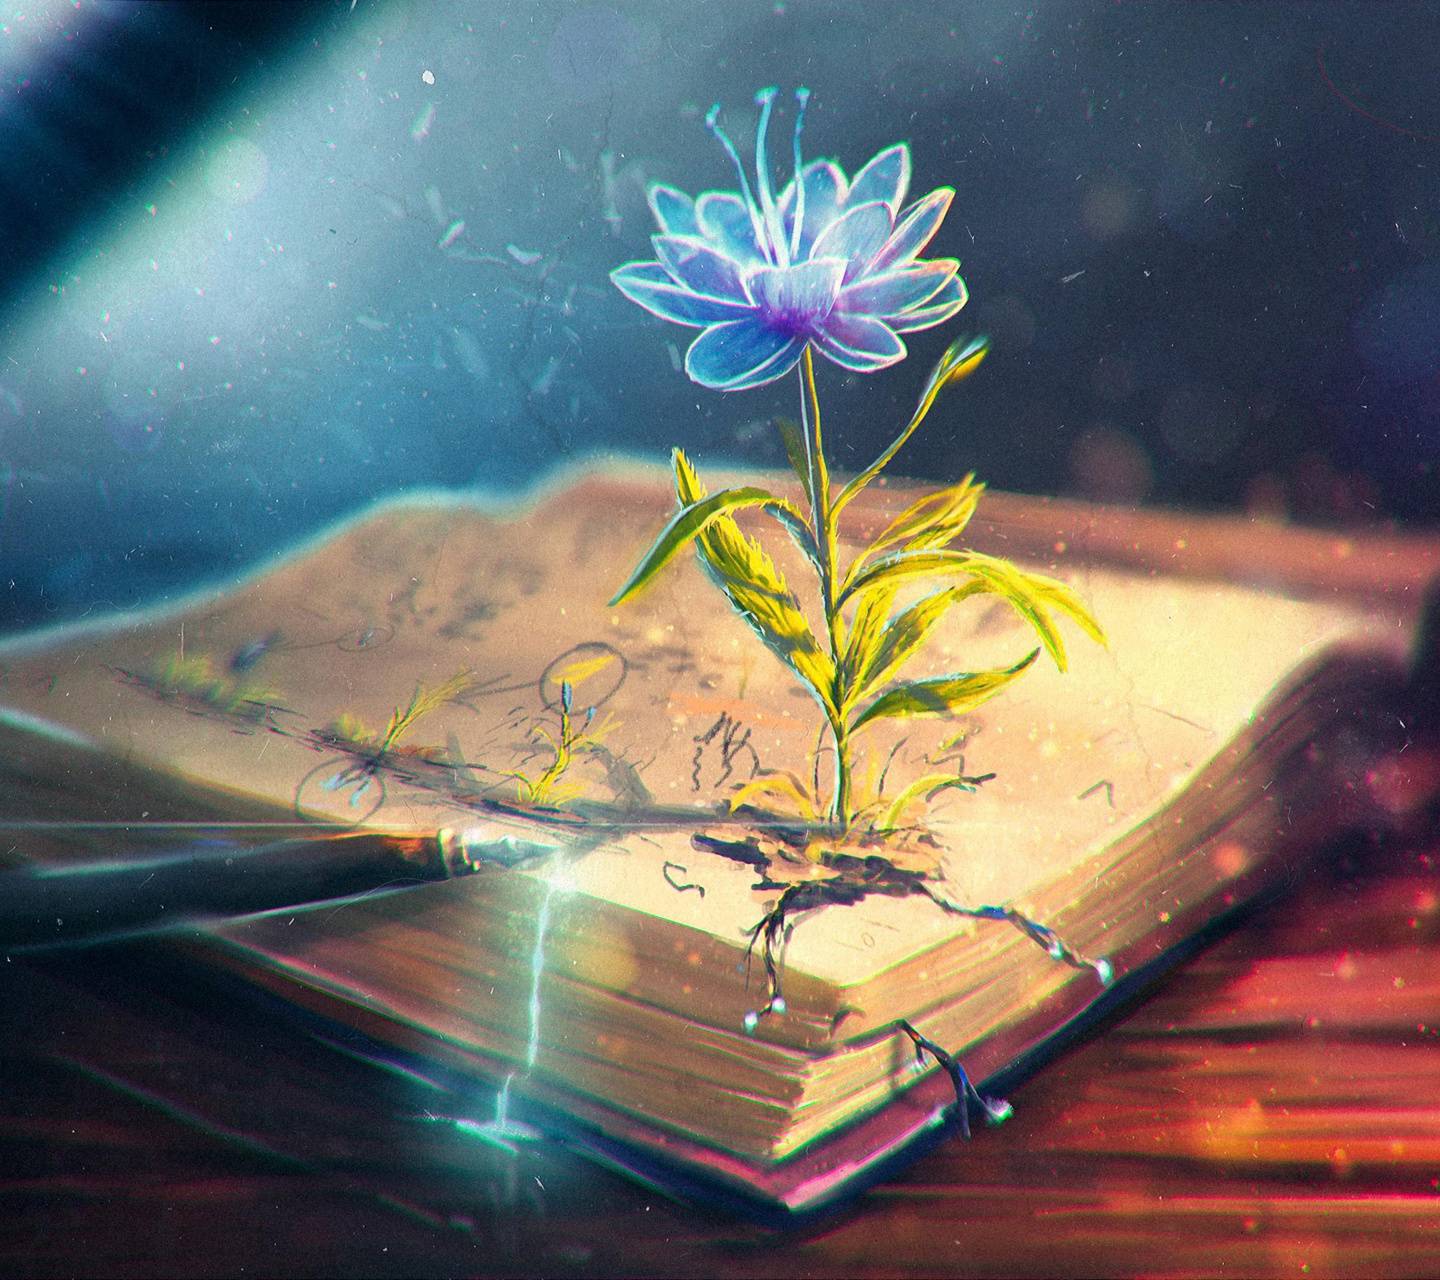 magic flowers images